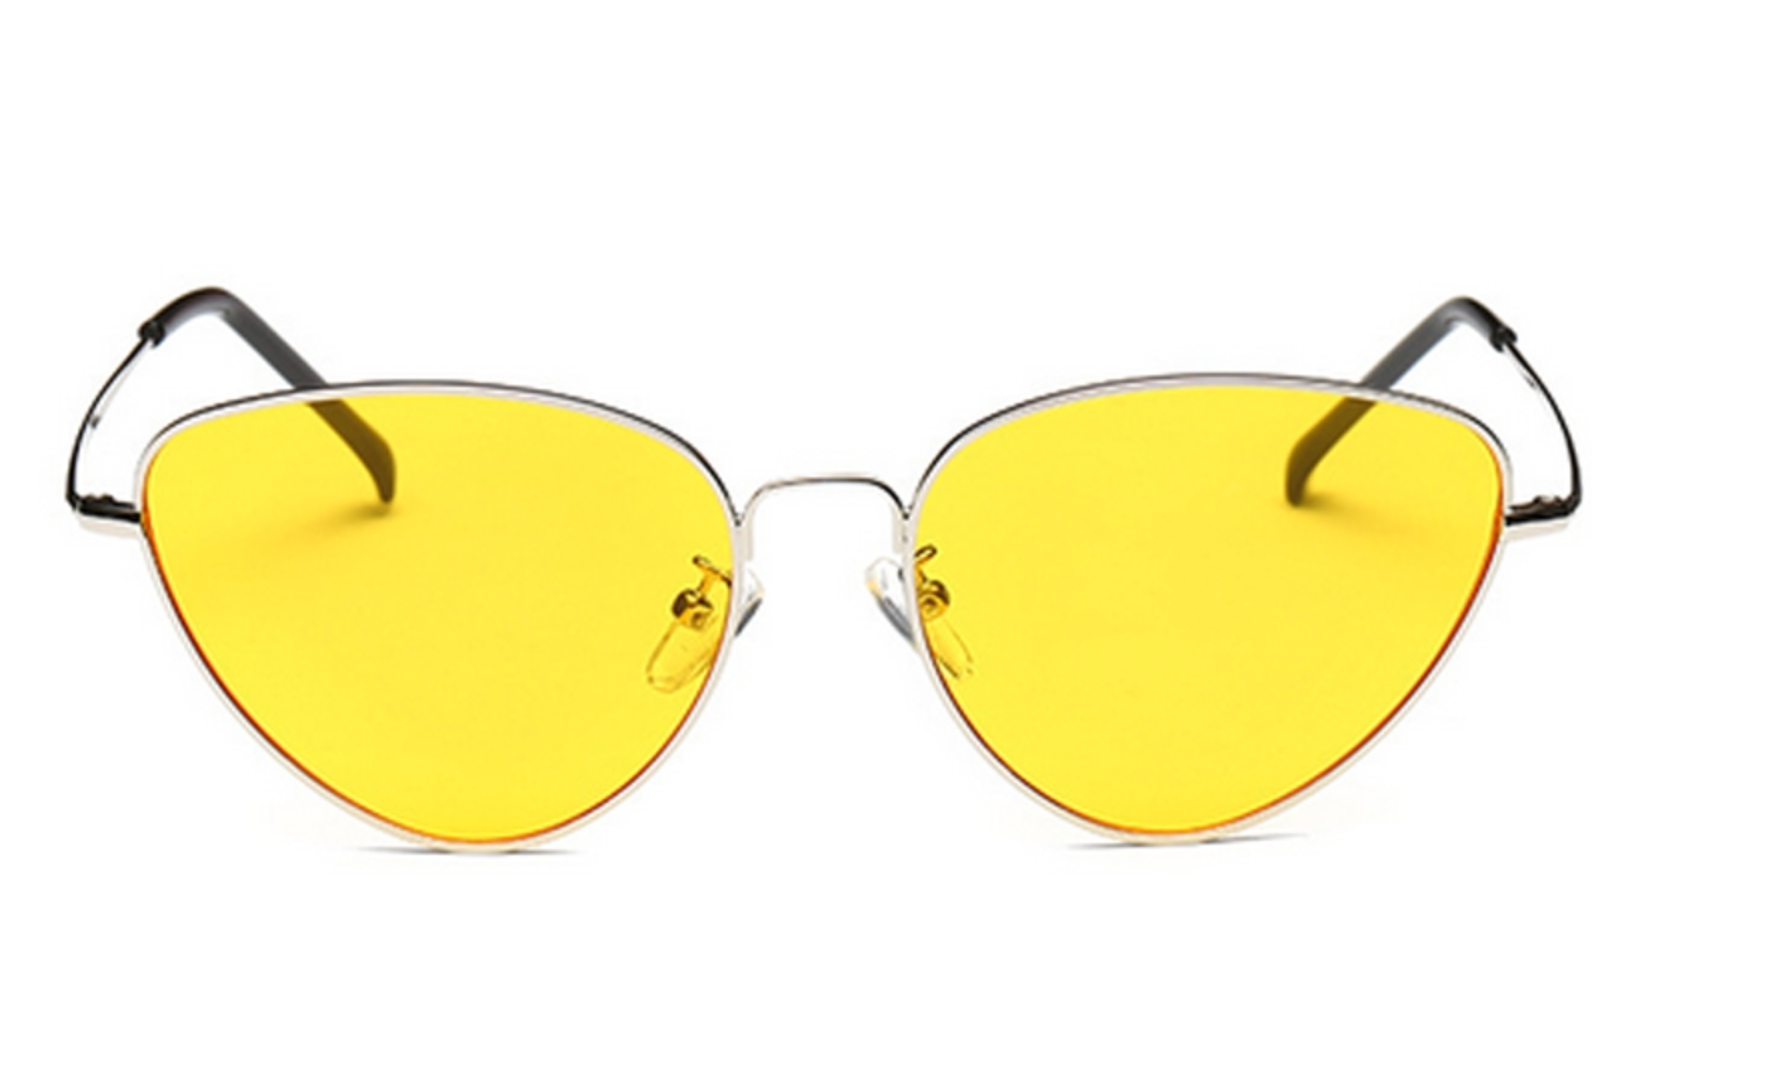 Lia Yellow Sunglasses